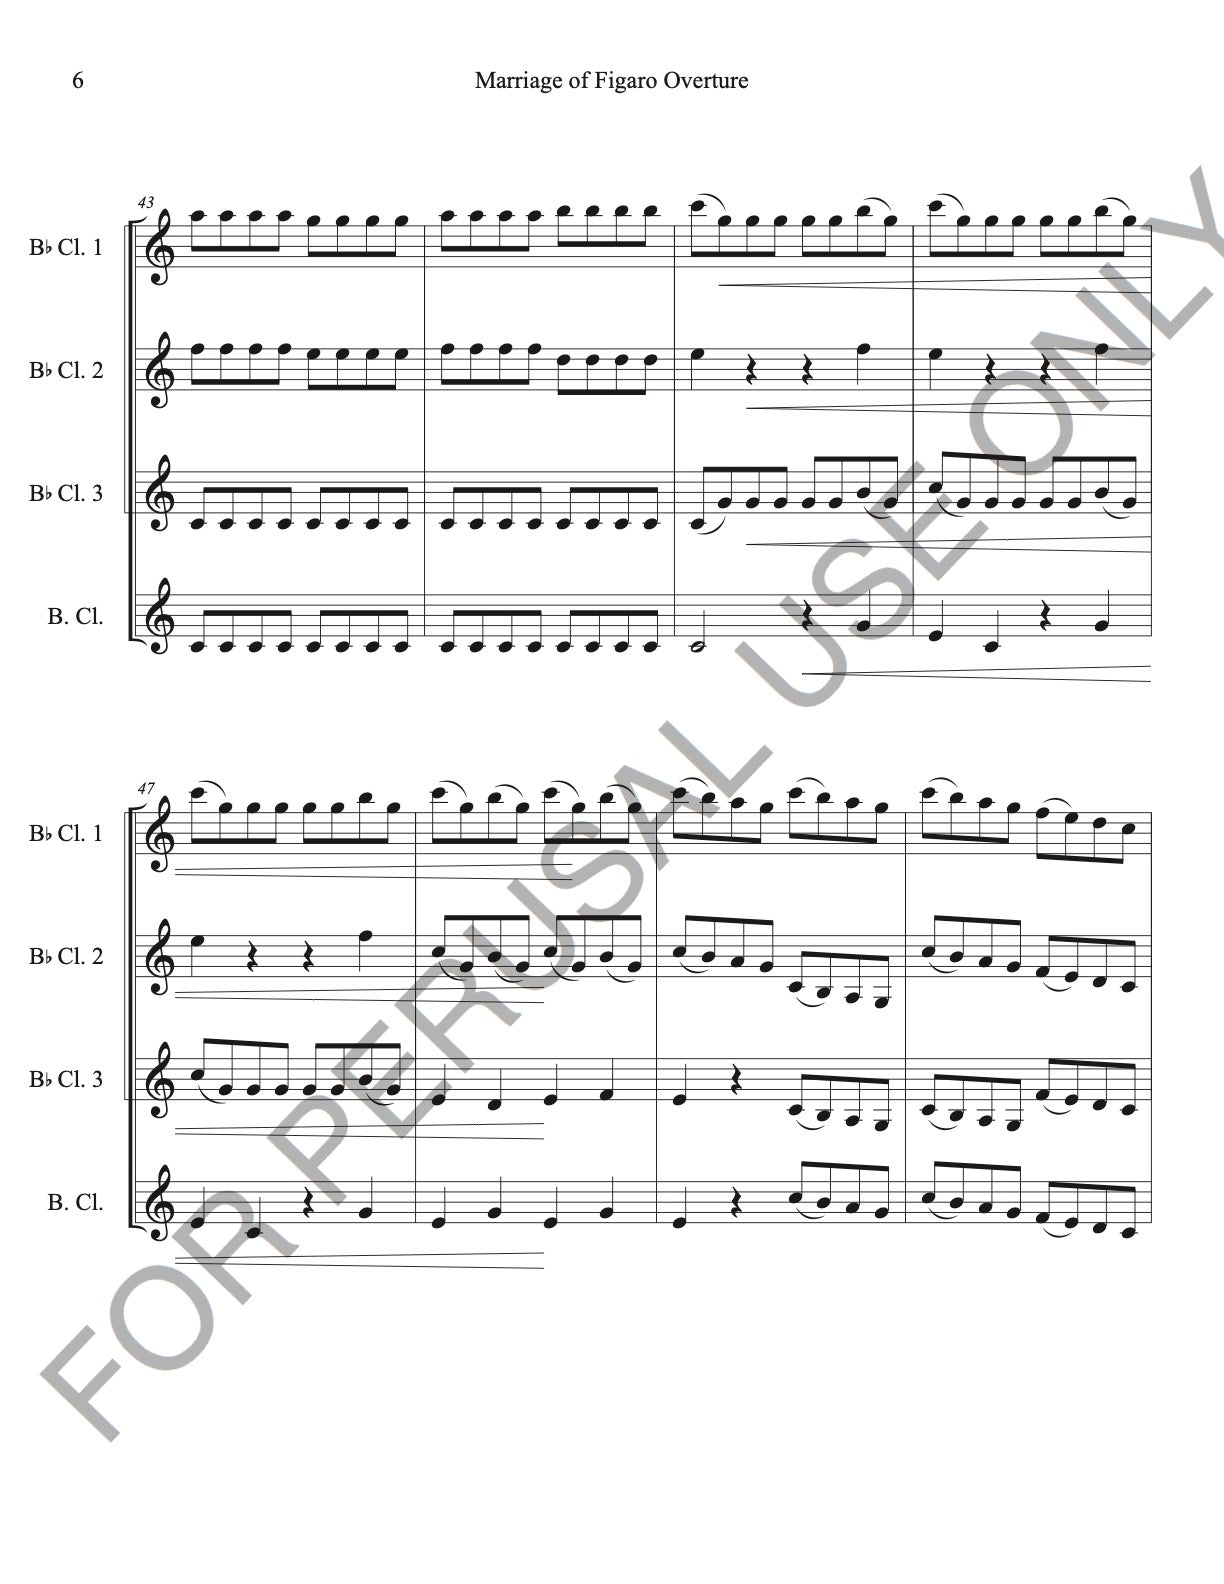 Clarinet Quartet sheet music- Mozart's The Marriage of Figaro Overture - ChaipruckMekara